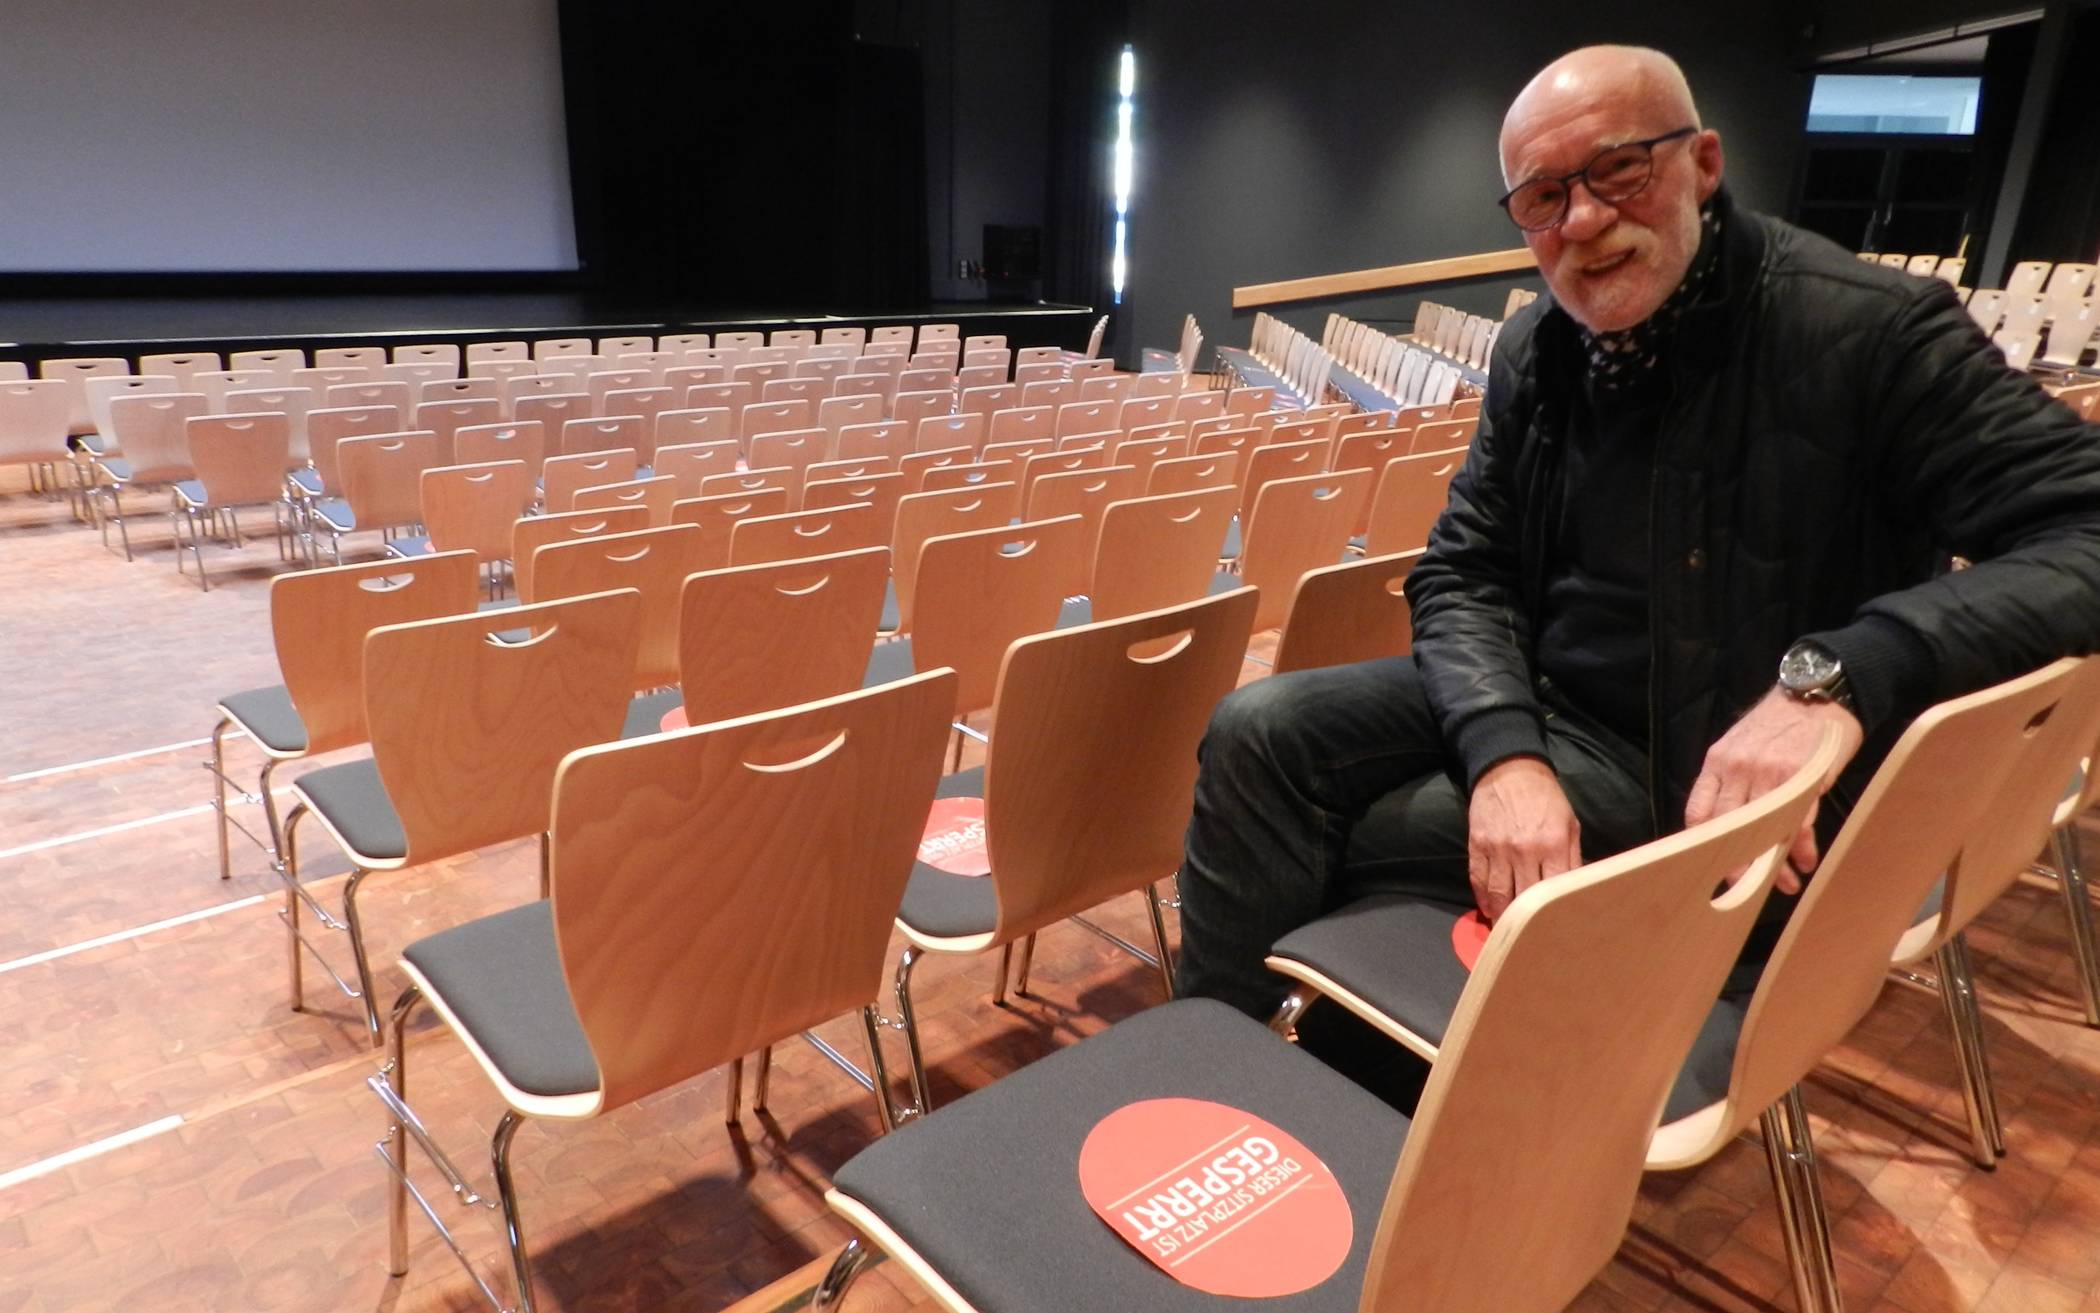  Kulturmanager Klaus Stevens präsentiert das Kino Kaarst im AEF. 